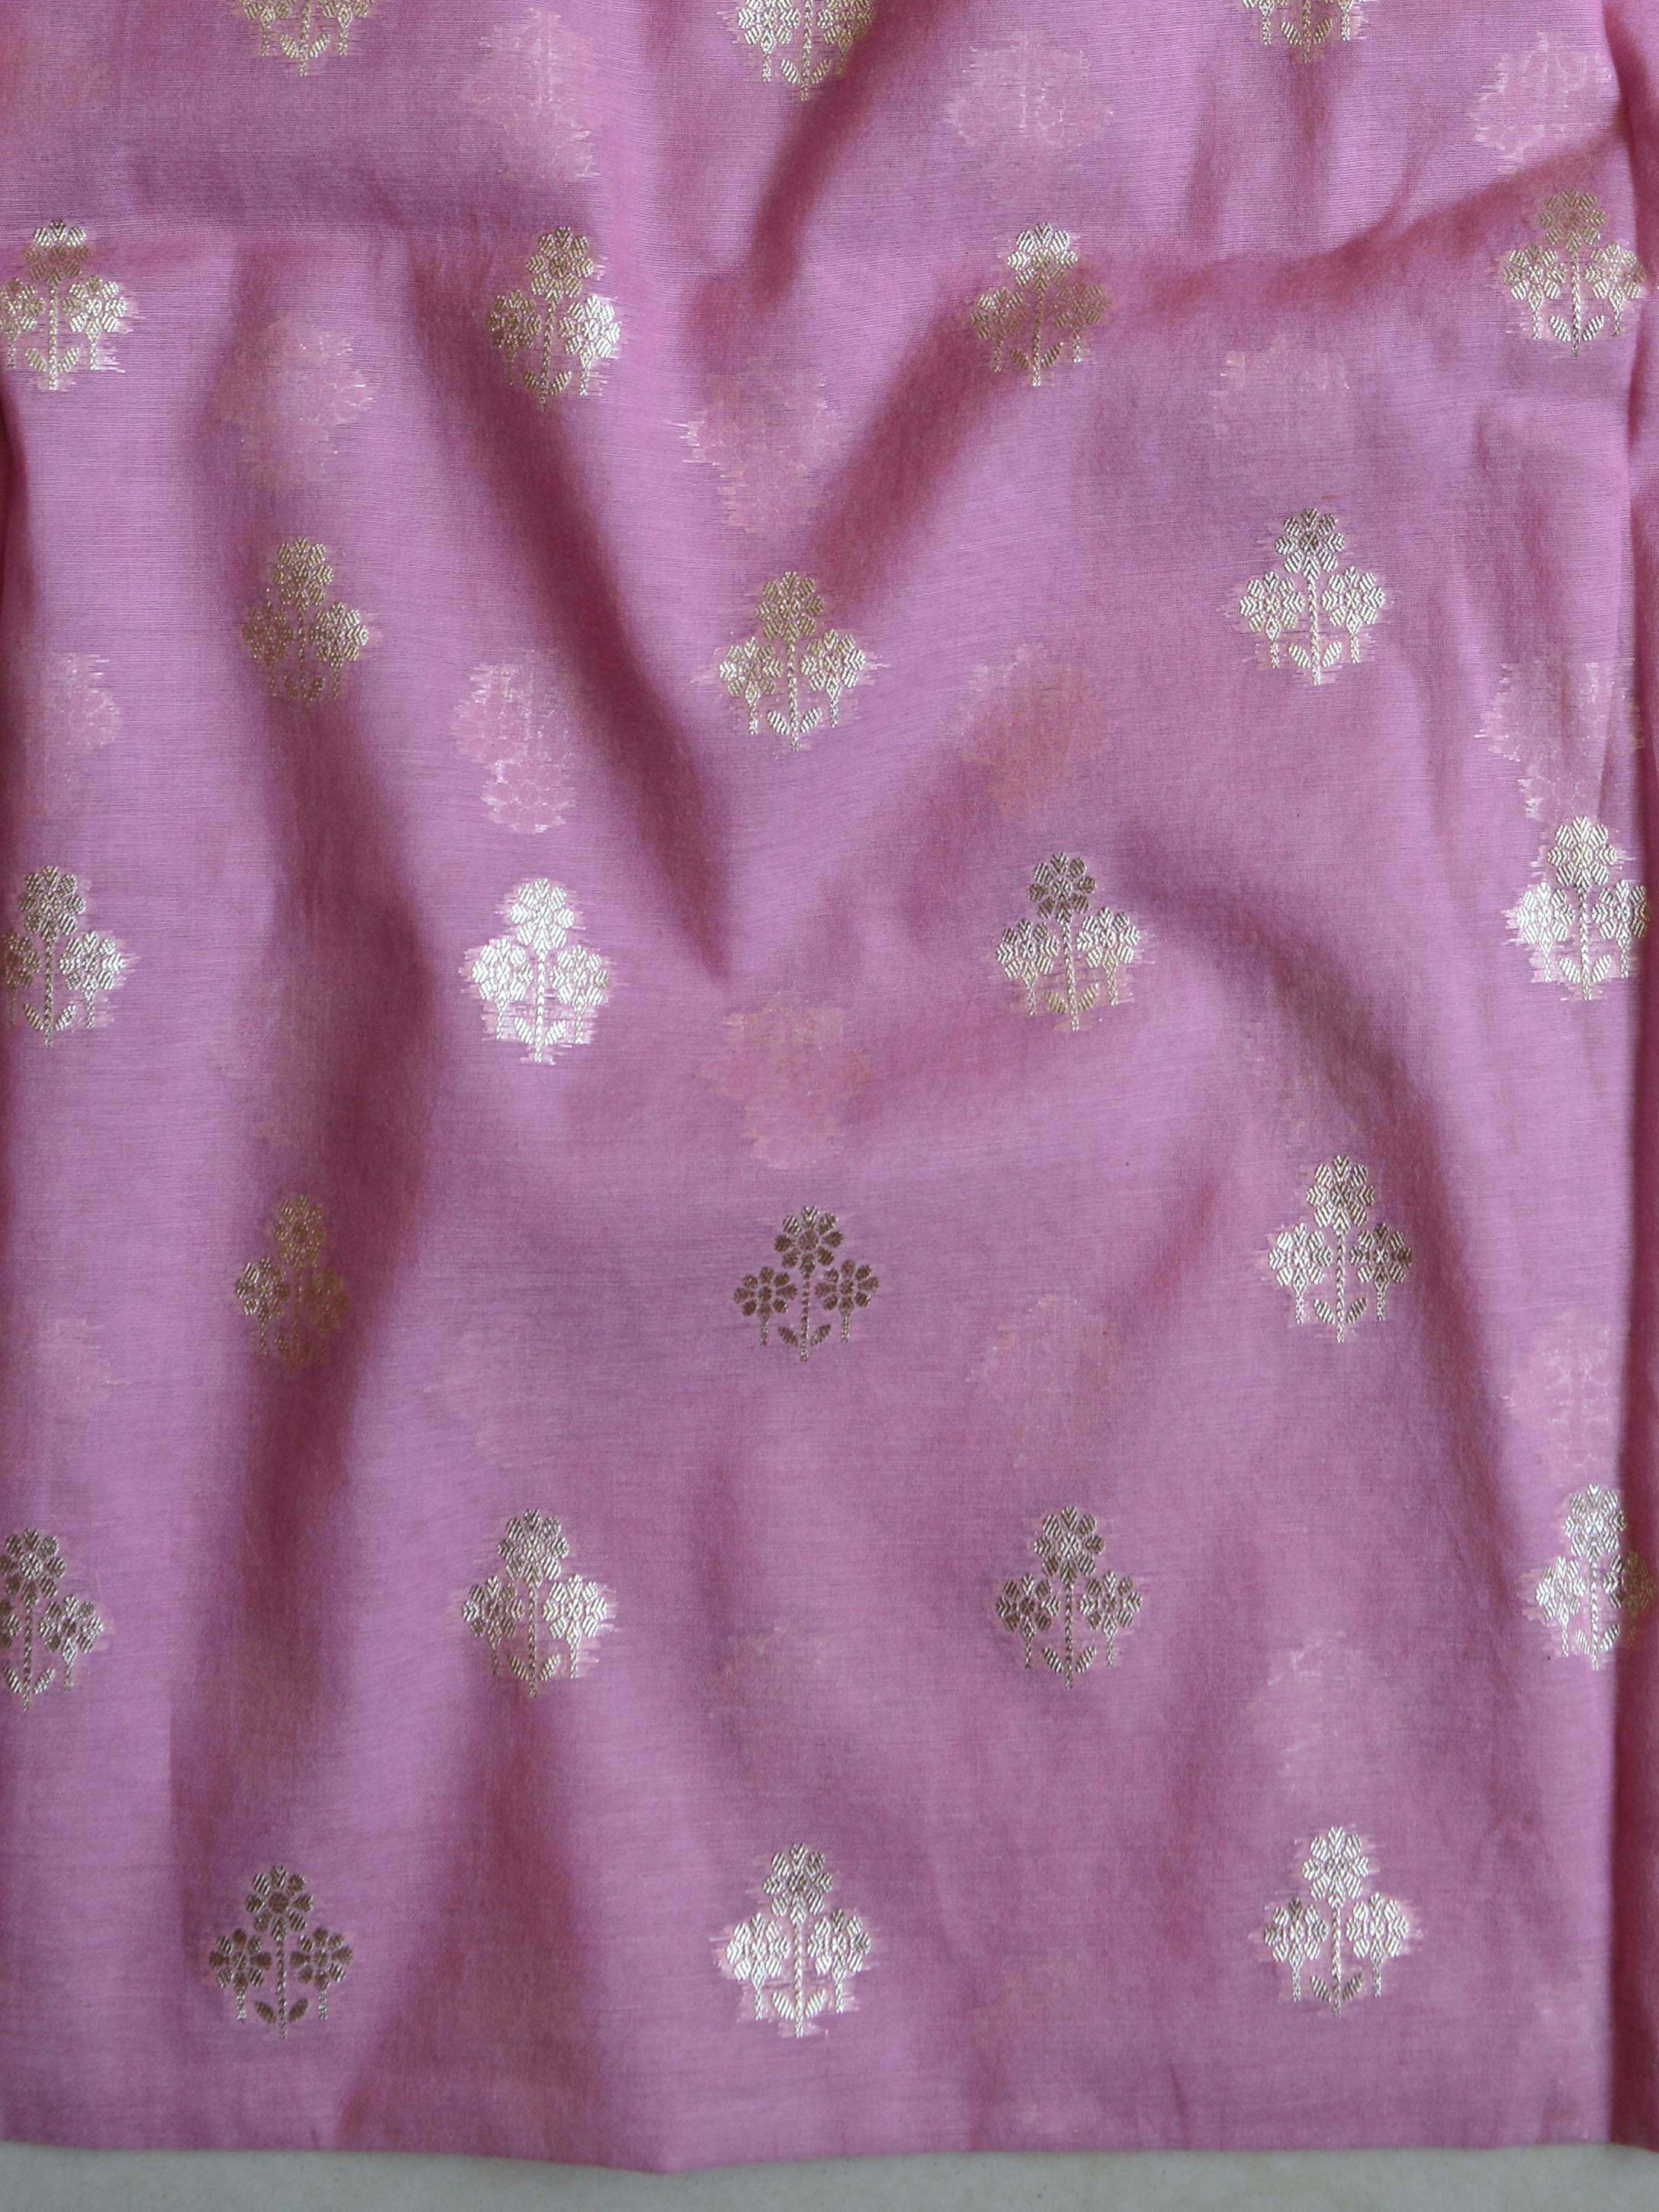 Banarasee Handloom Chanderi Silk Ombre Dyed Zari Work Salwar Kameez Dupatta Set-Blush Pink